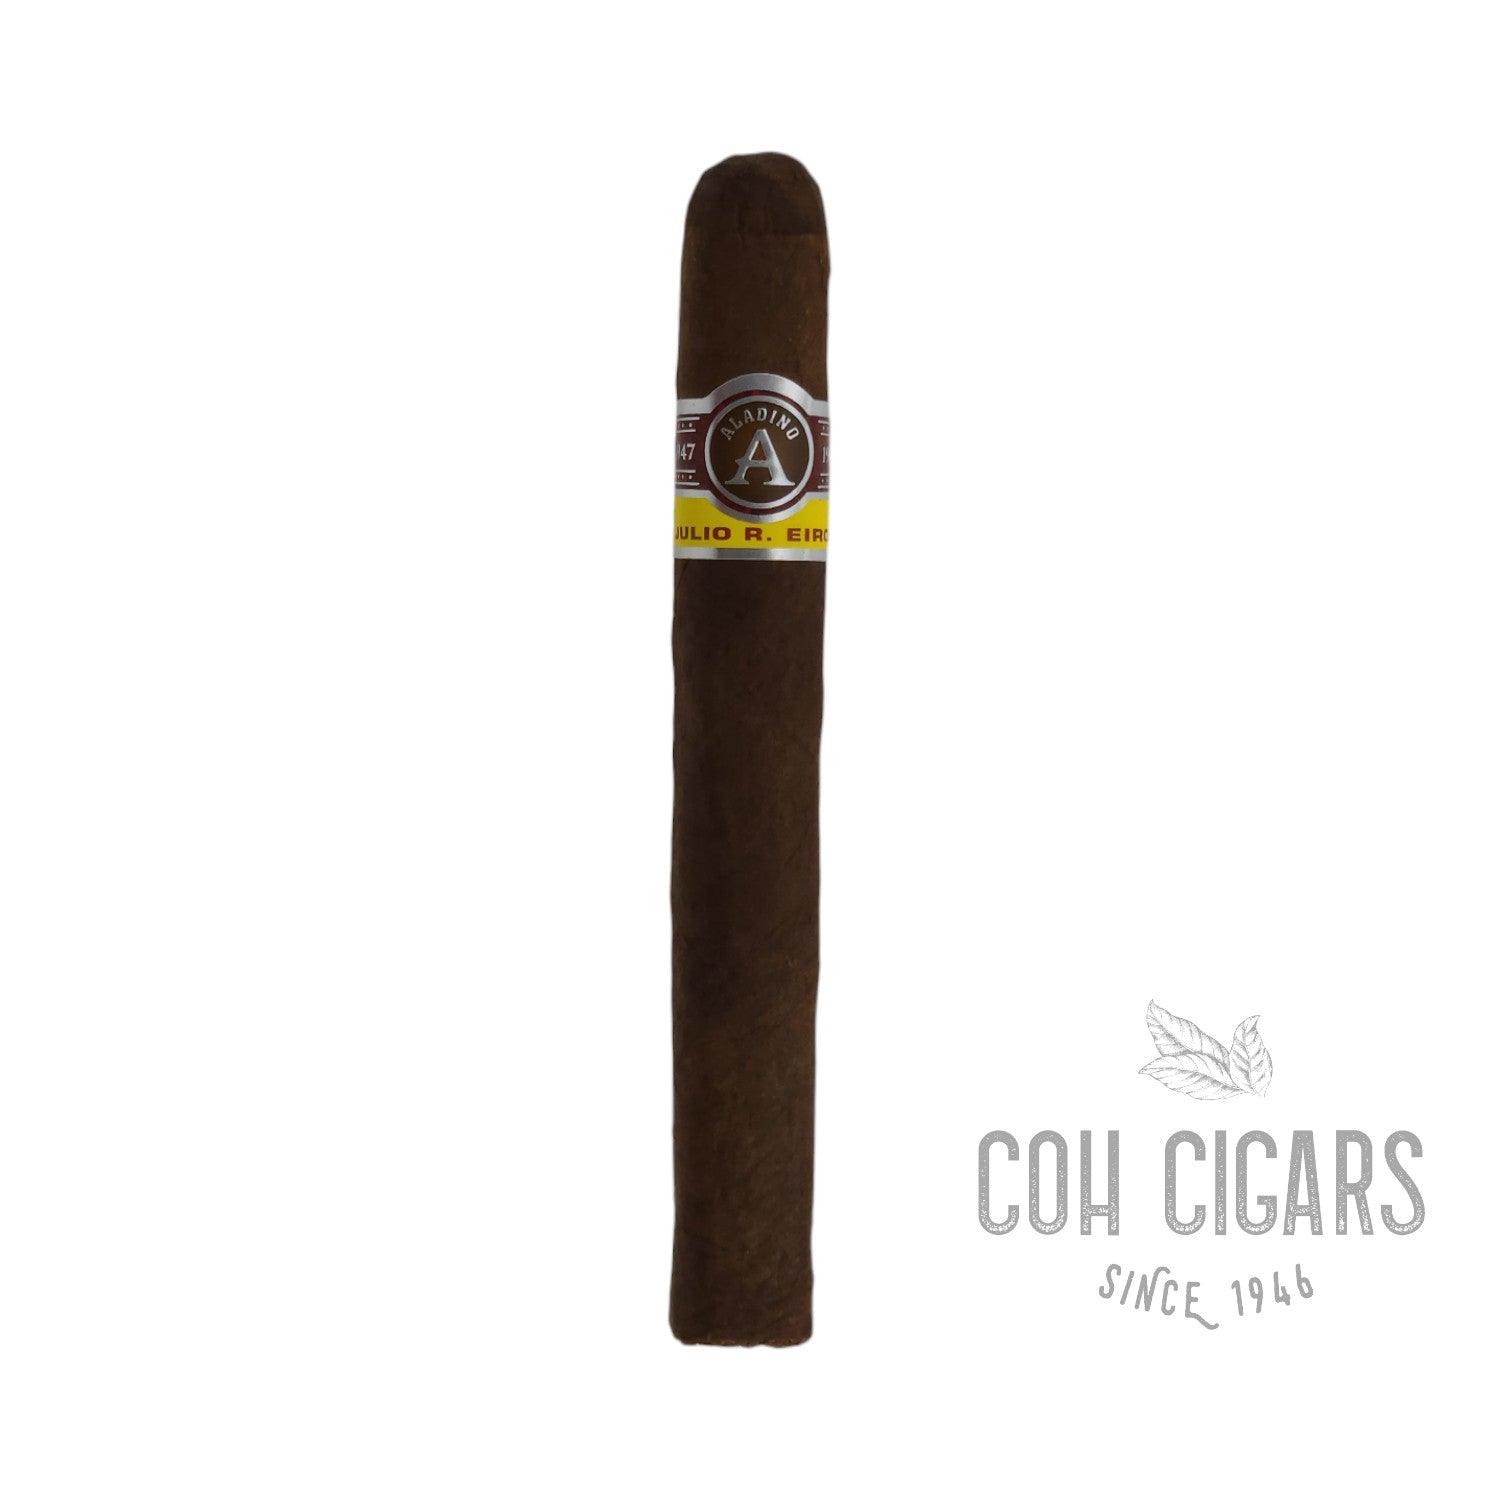 Aladino Cigar | JRE Tobacco Farm Maduro Box Pressed Toro | Box 20 - hk.cohcigars